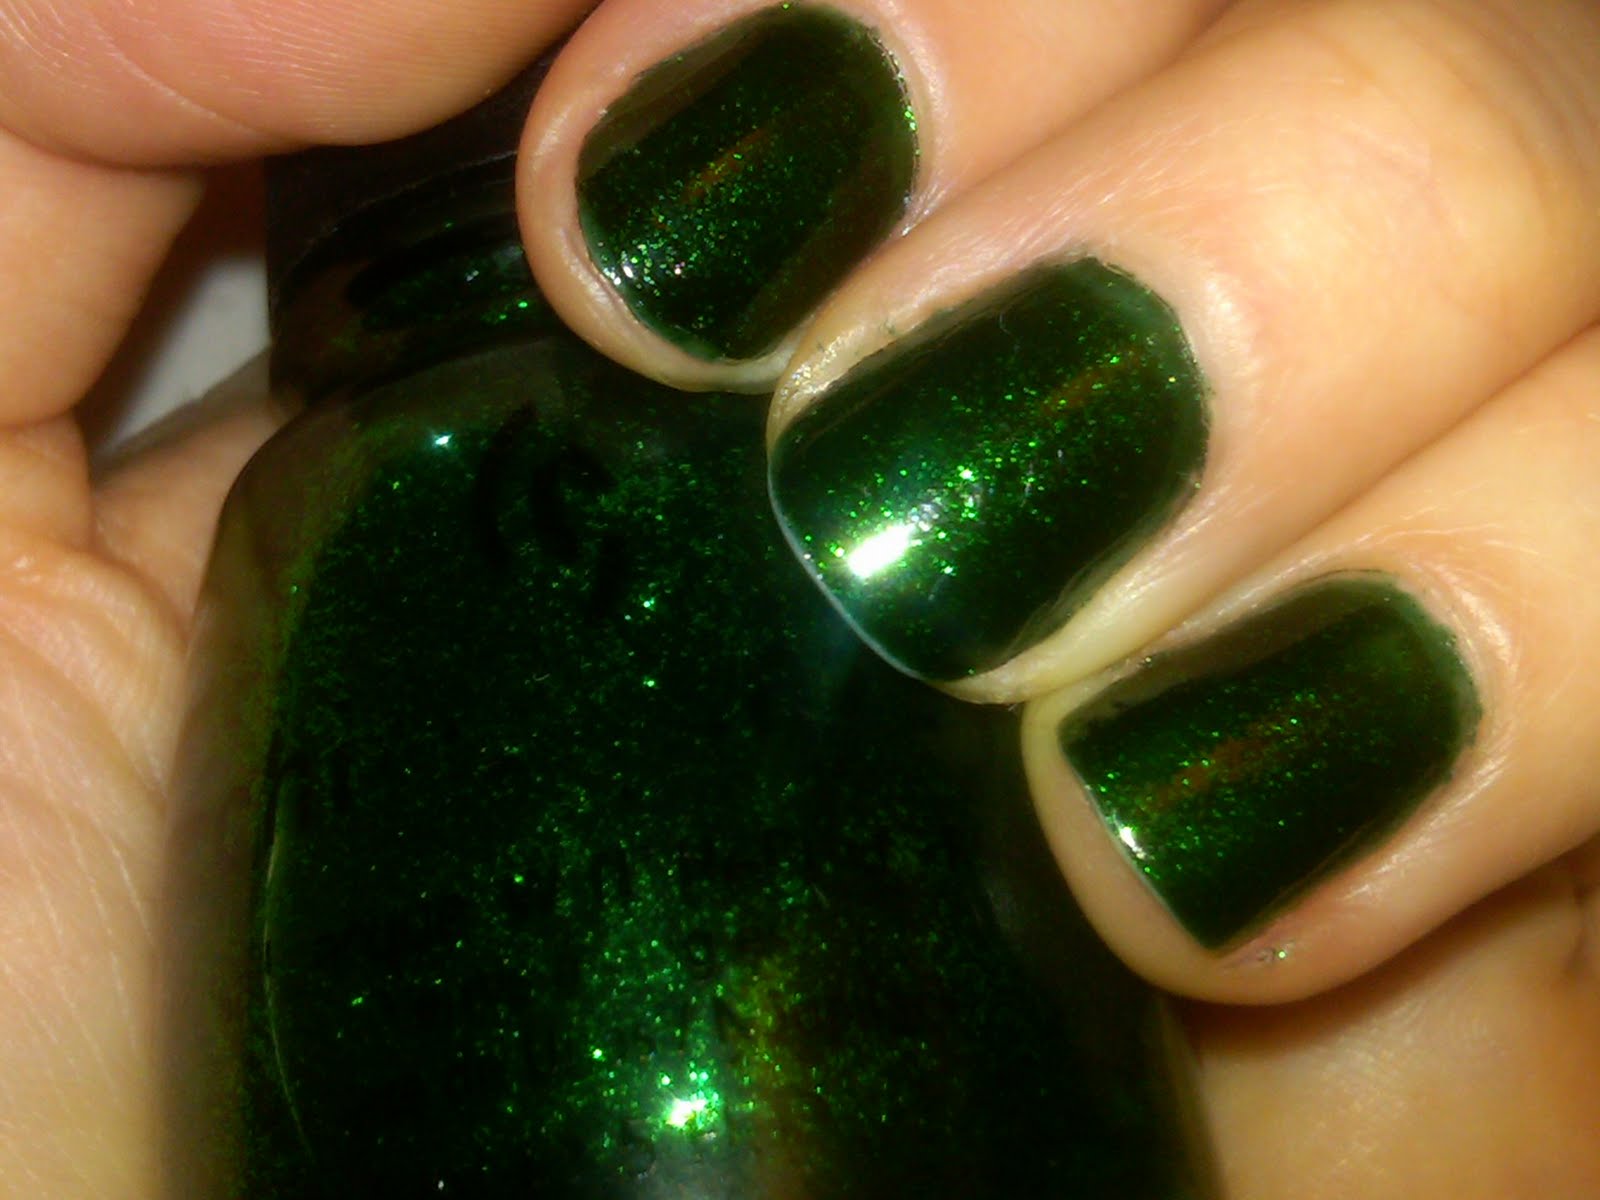 4. China Glaze Nail Lacquer in "Emerald Bae" - wide 10